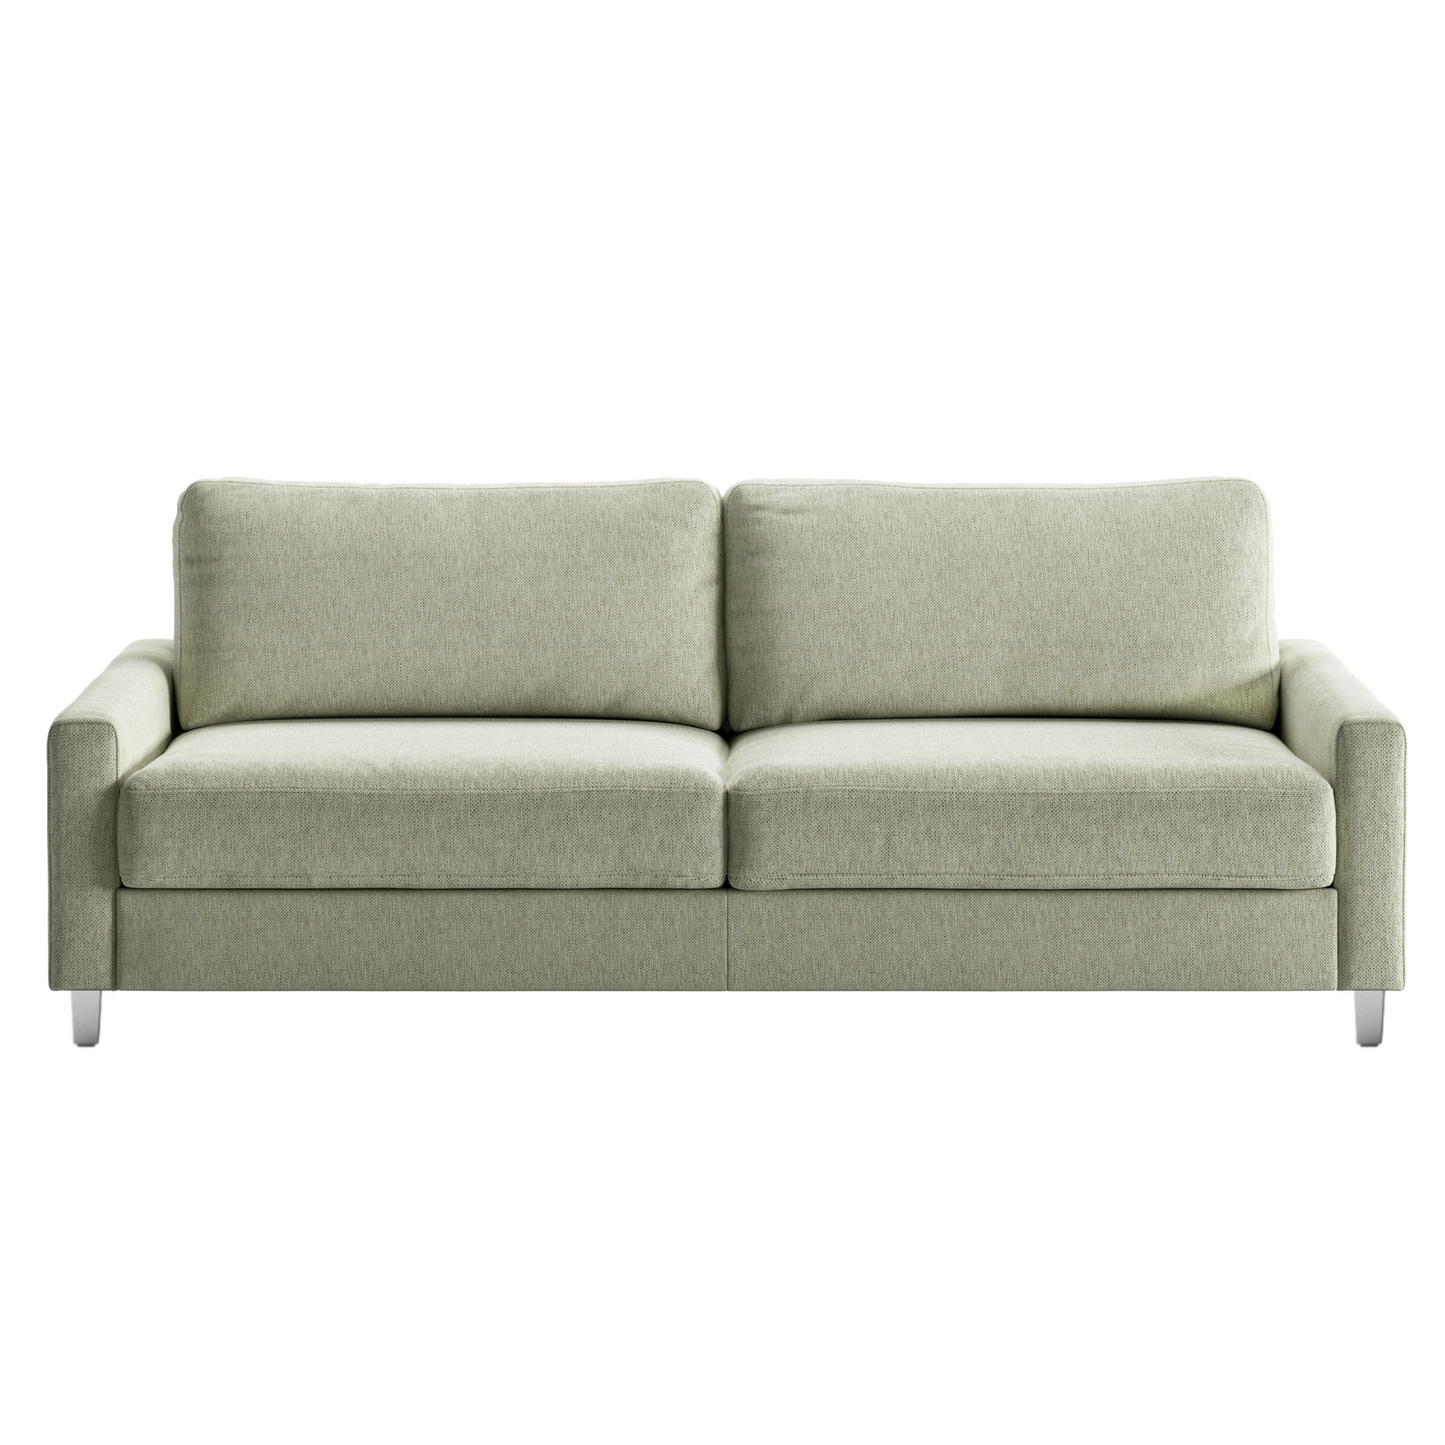 Luonto Nico King Sleeper Sofa Quick Ship Program Loule 616 Fabric (beige) With Chrome Leg